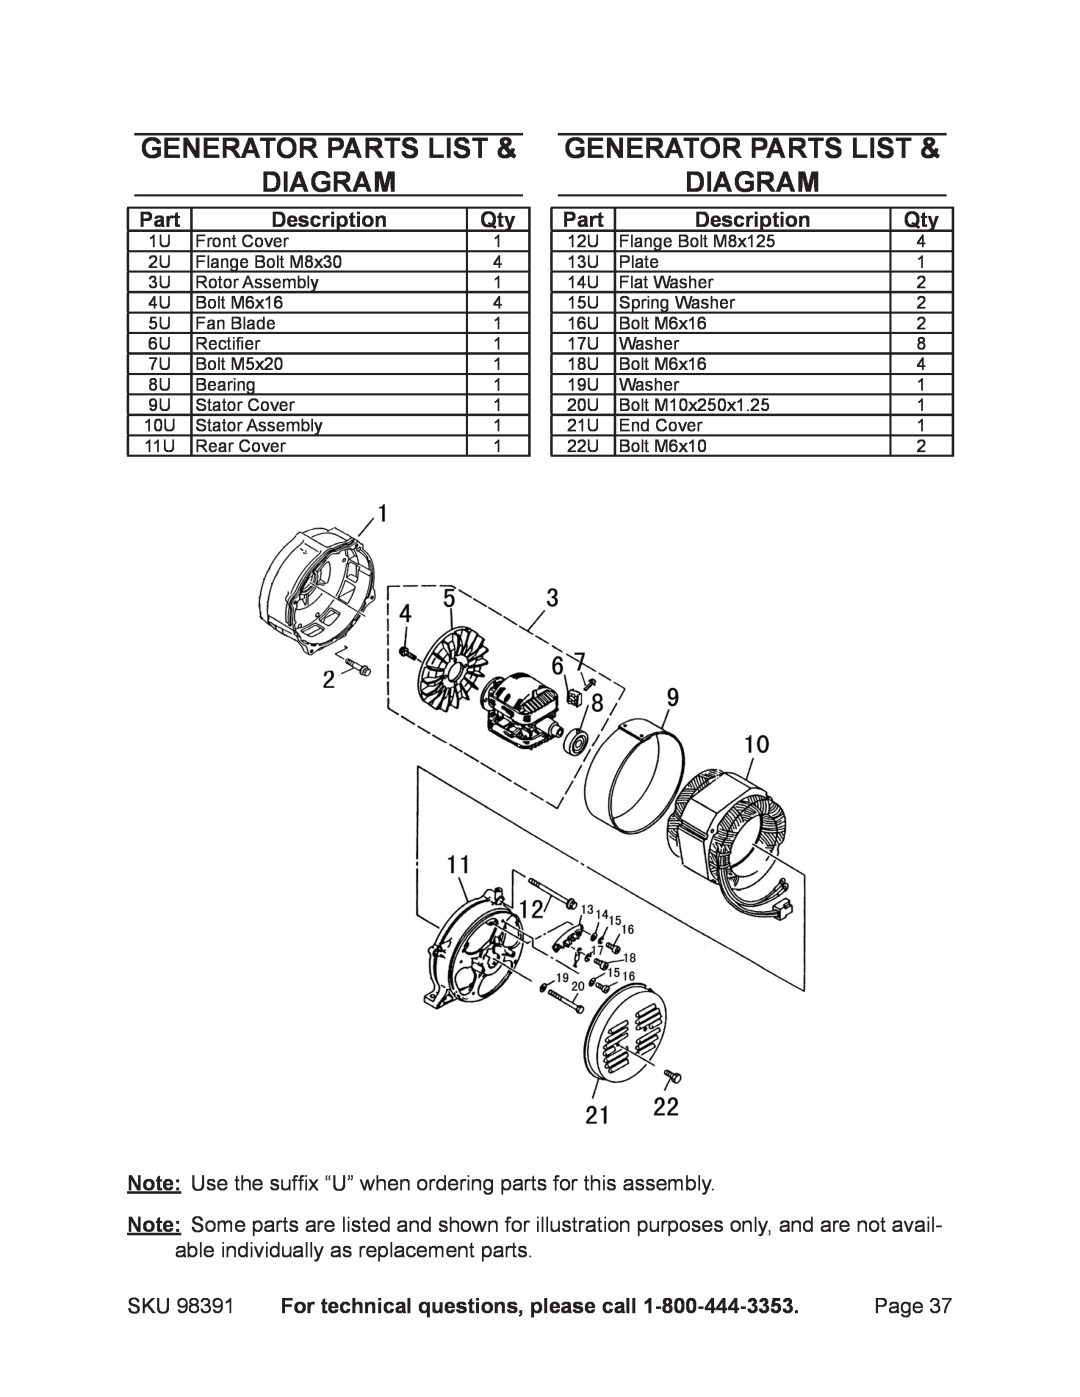 Chicago Electric 98391 manual Generator PARTS LIST Diagram, Part, Description, For technical questions, please call 